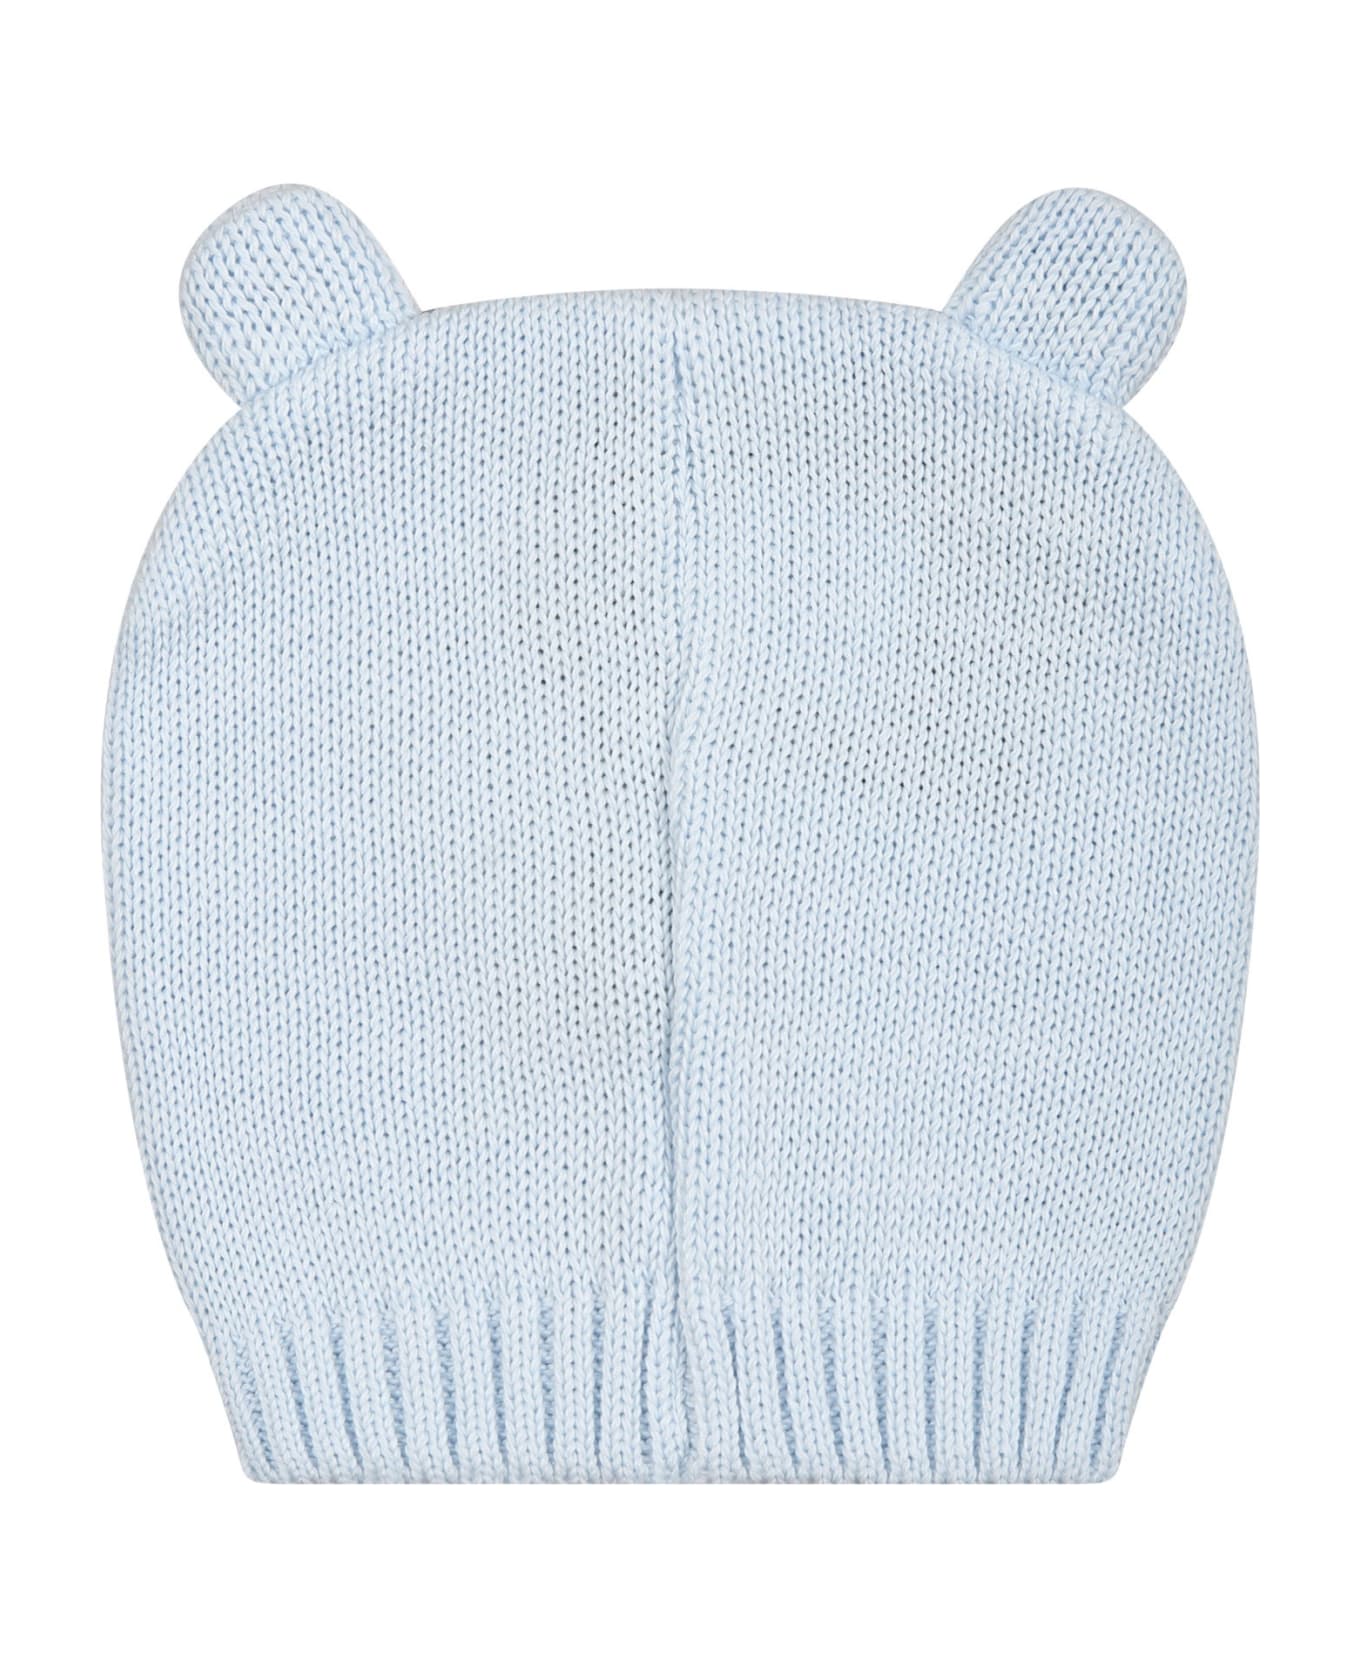 Little Bear Light Blue Hat For Baby Boy - Cielo